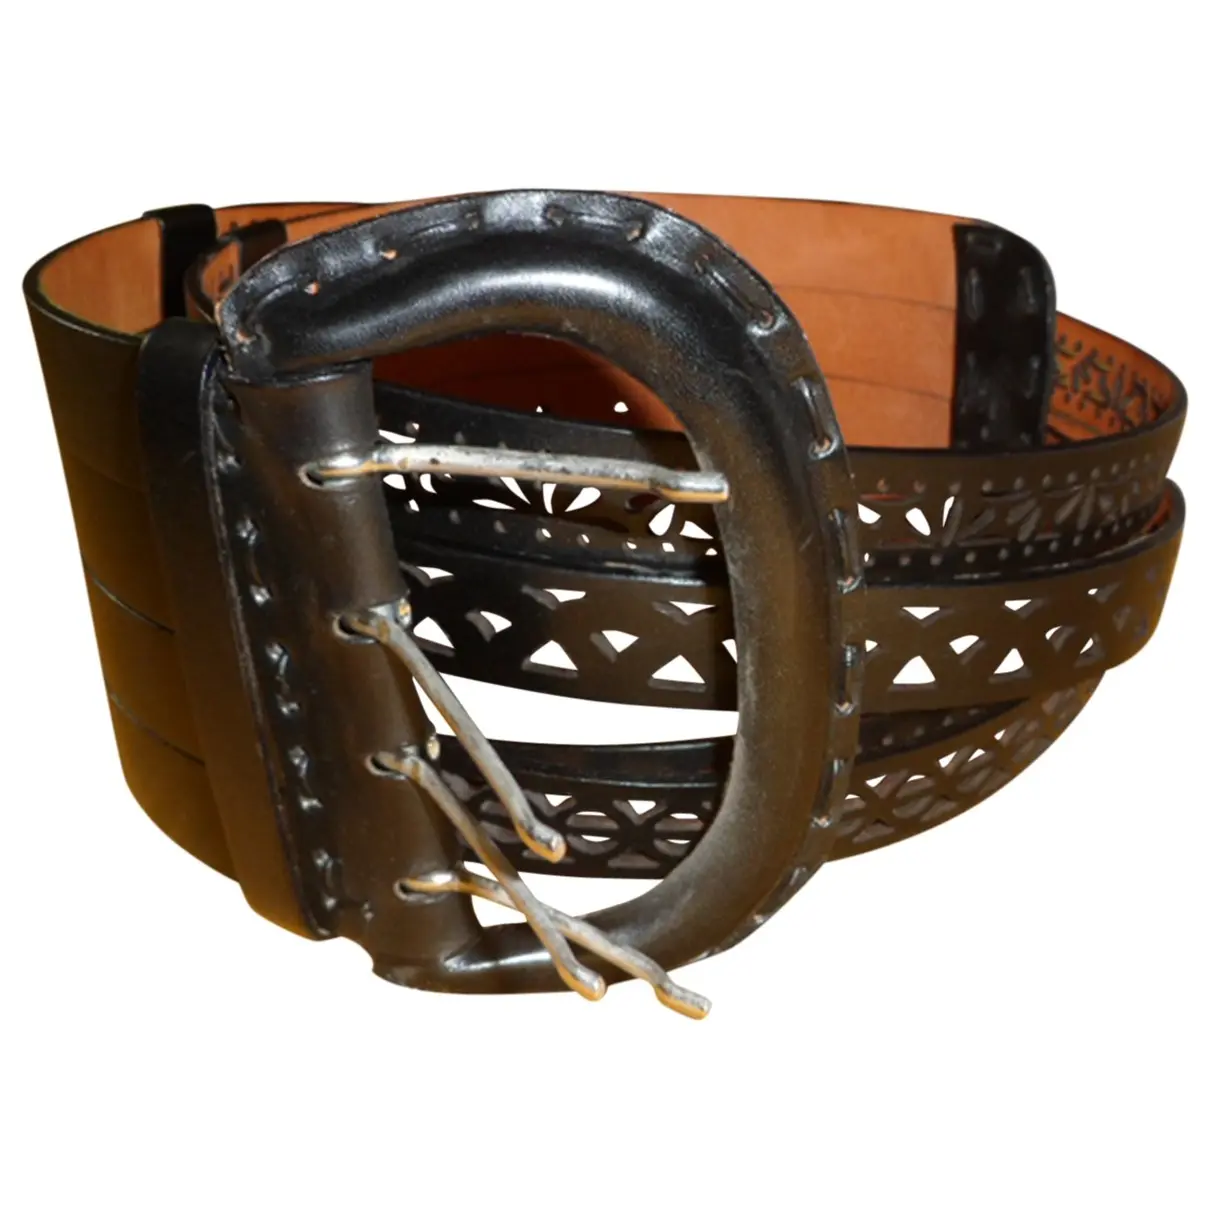 Jean Paul Gaultier Leather belt for sale